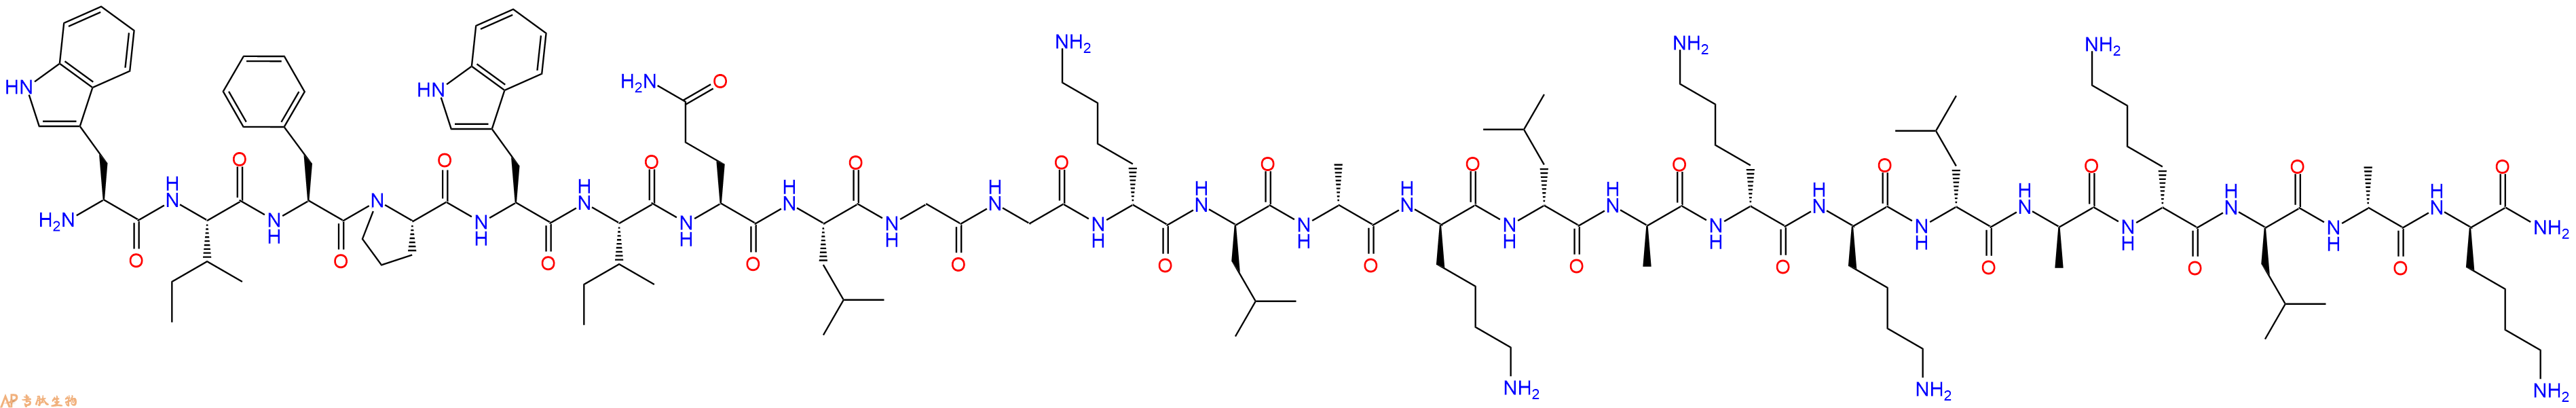 专肽生物产品GRP78 Binding Chimeric Peptide Motif、WIFPWIQL-GG- klaklakklaklak-CONH2